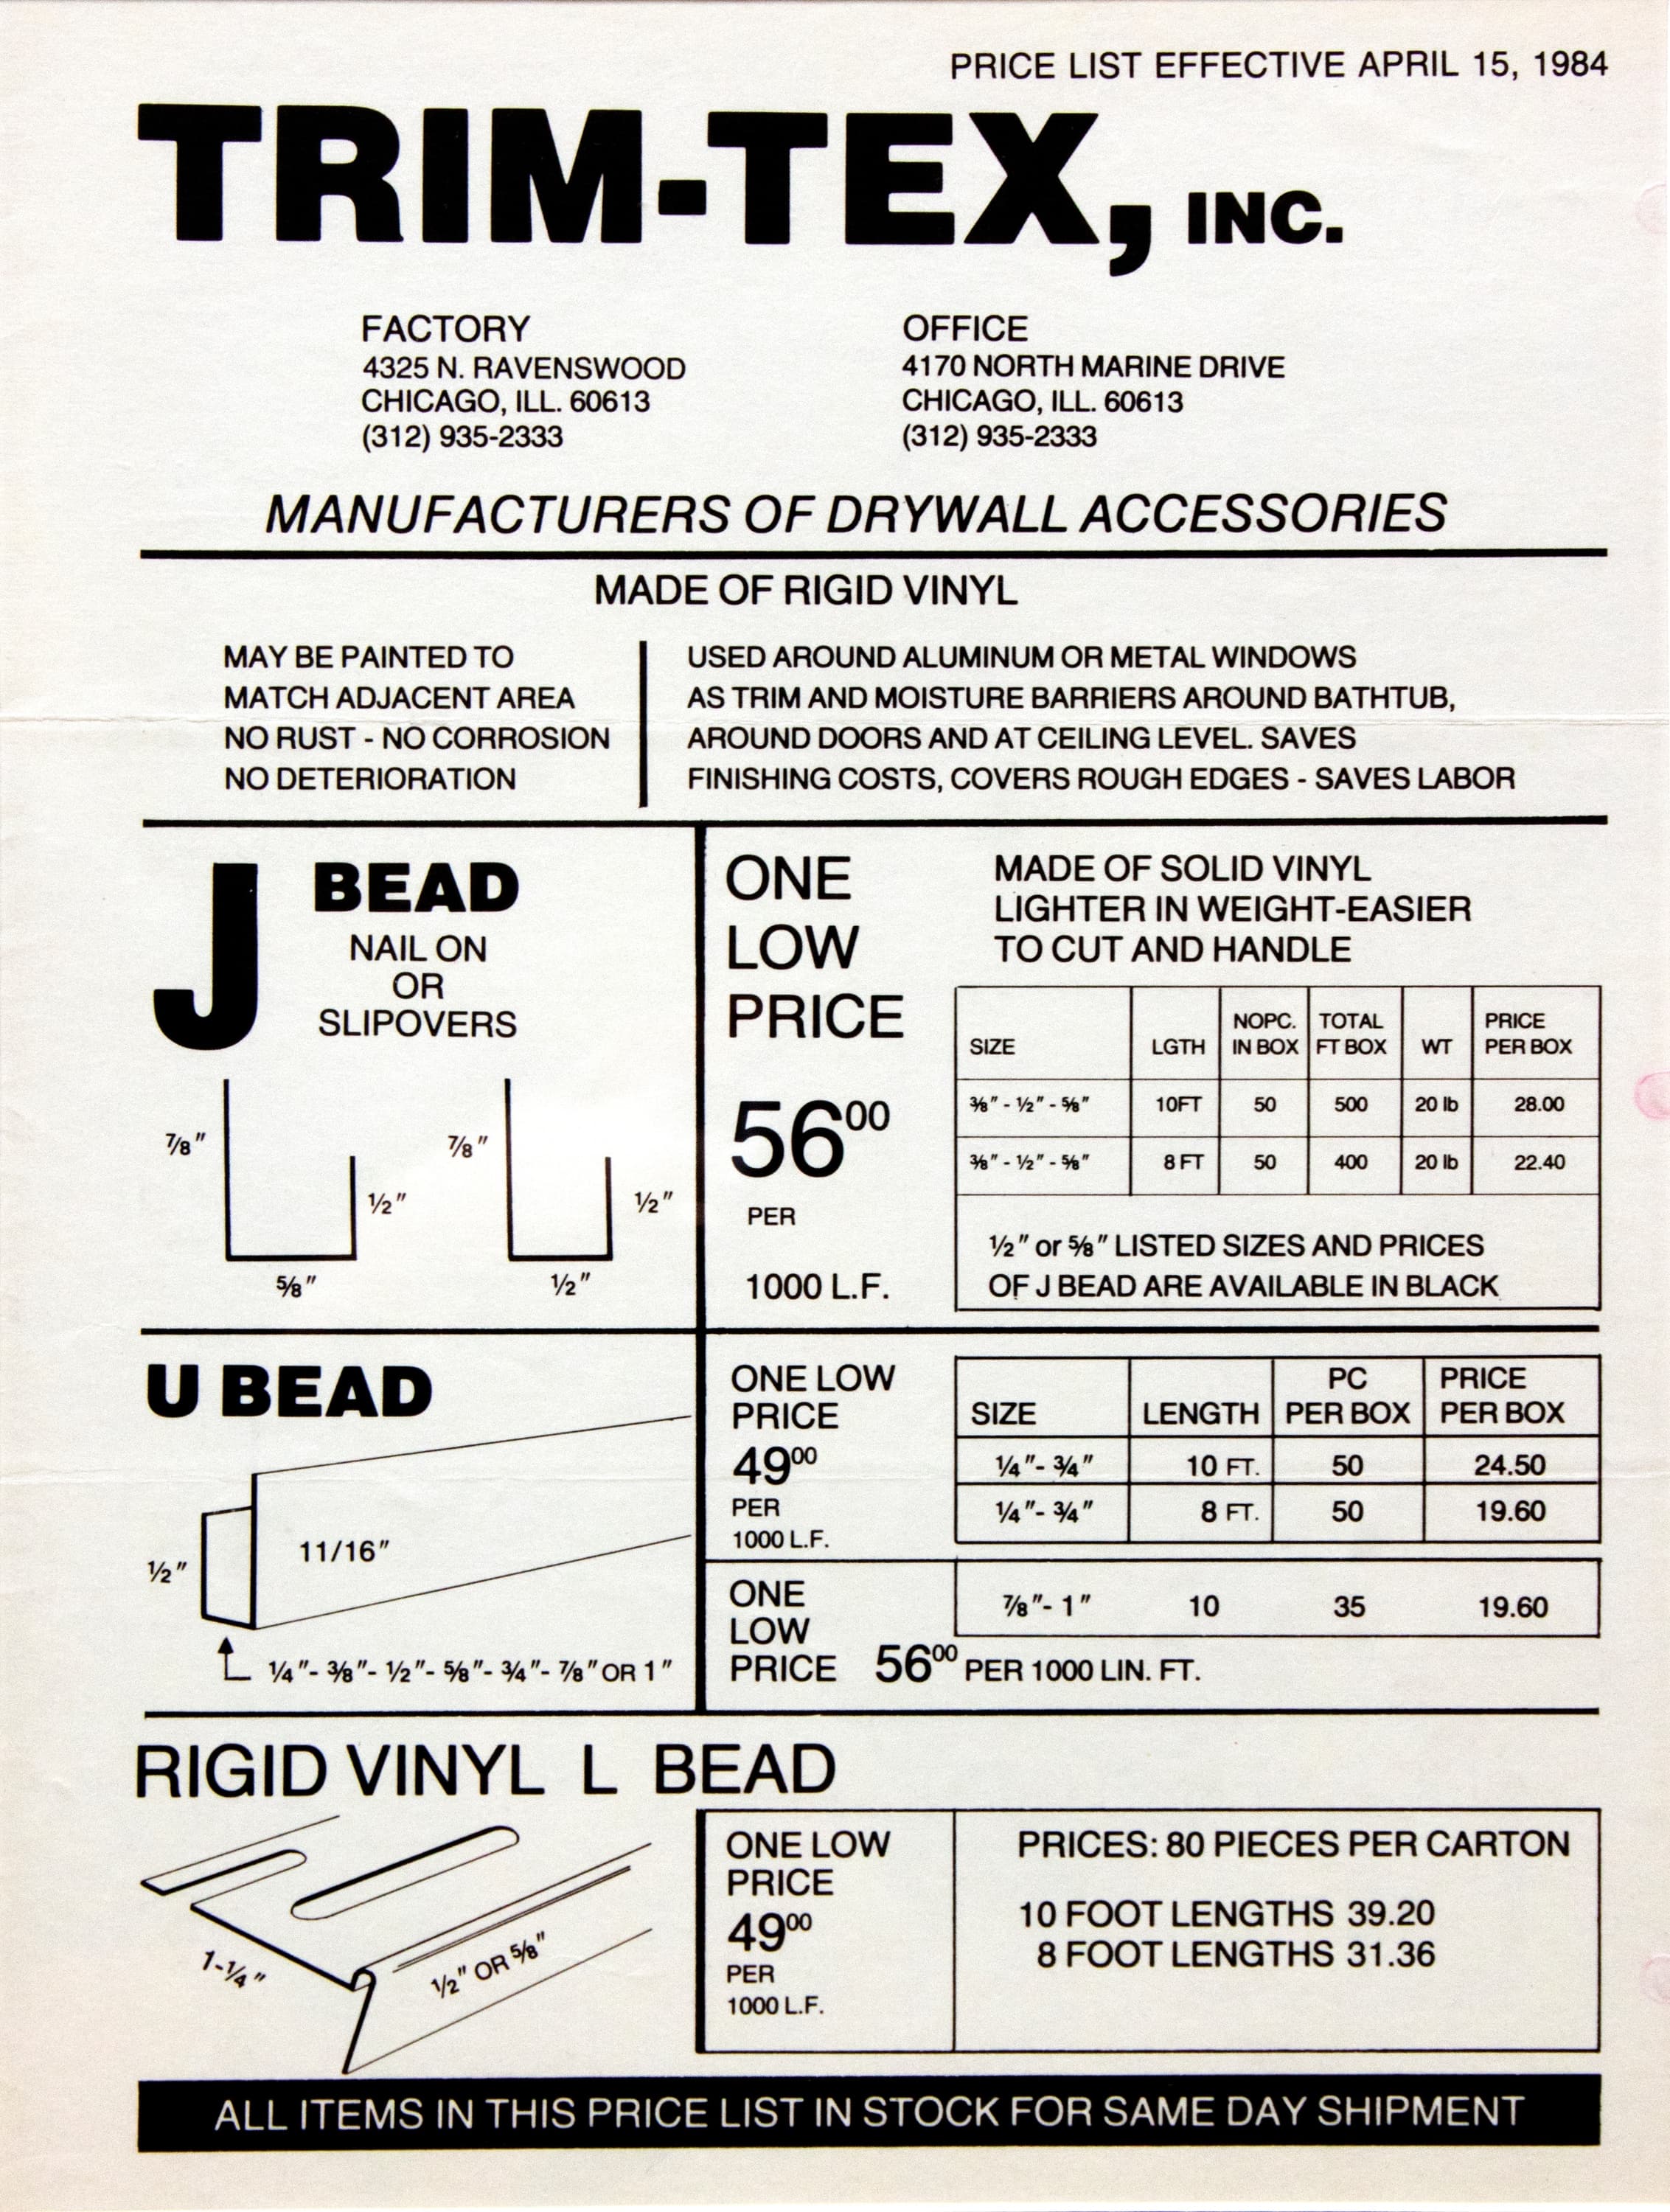 An original price list from Trim-Tex in 1984.